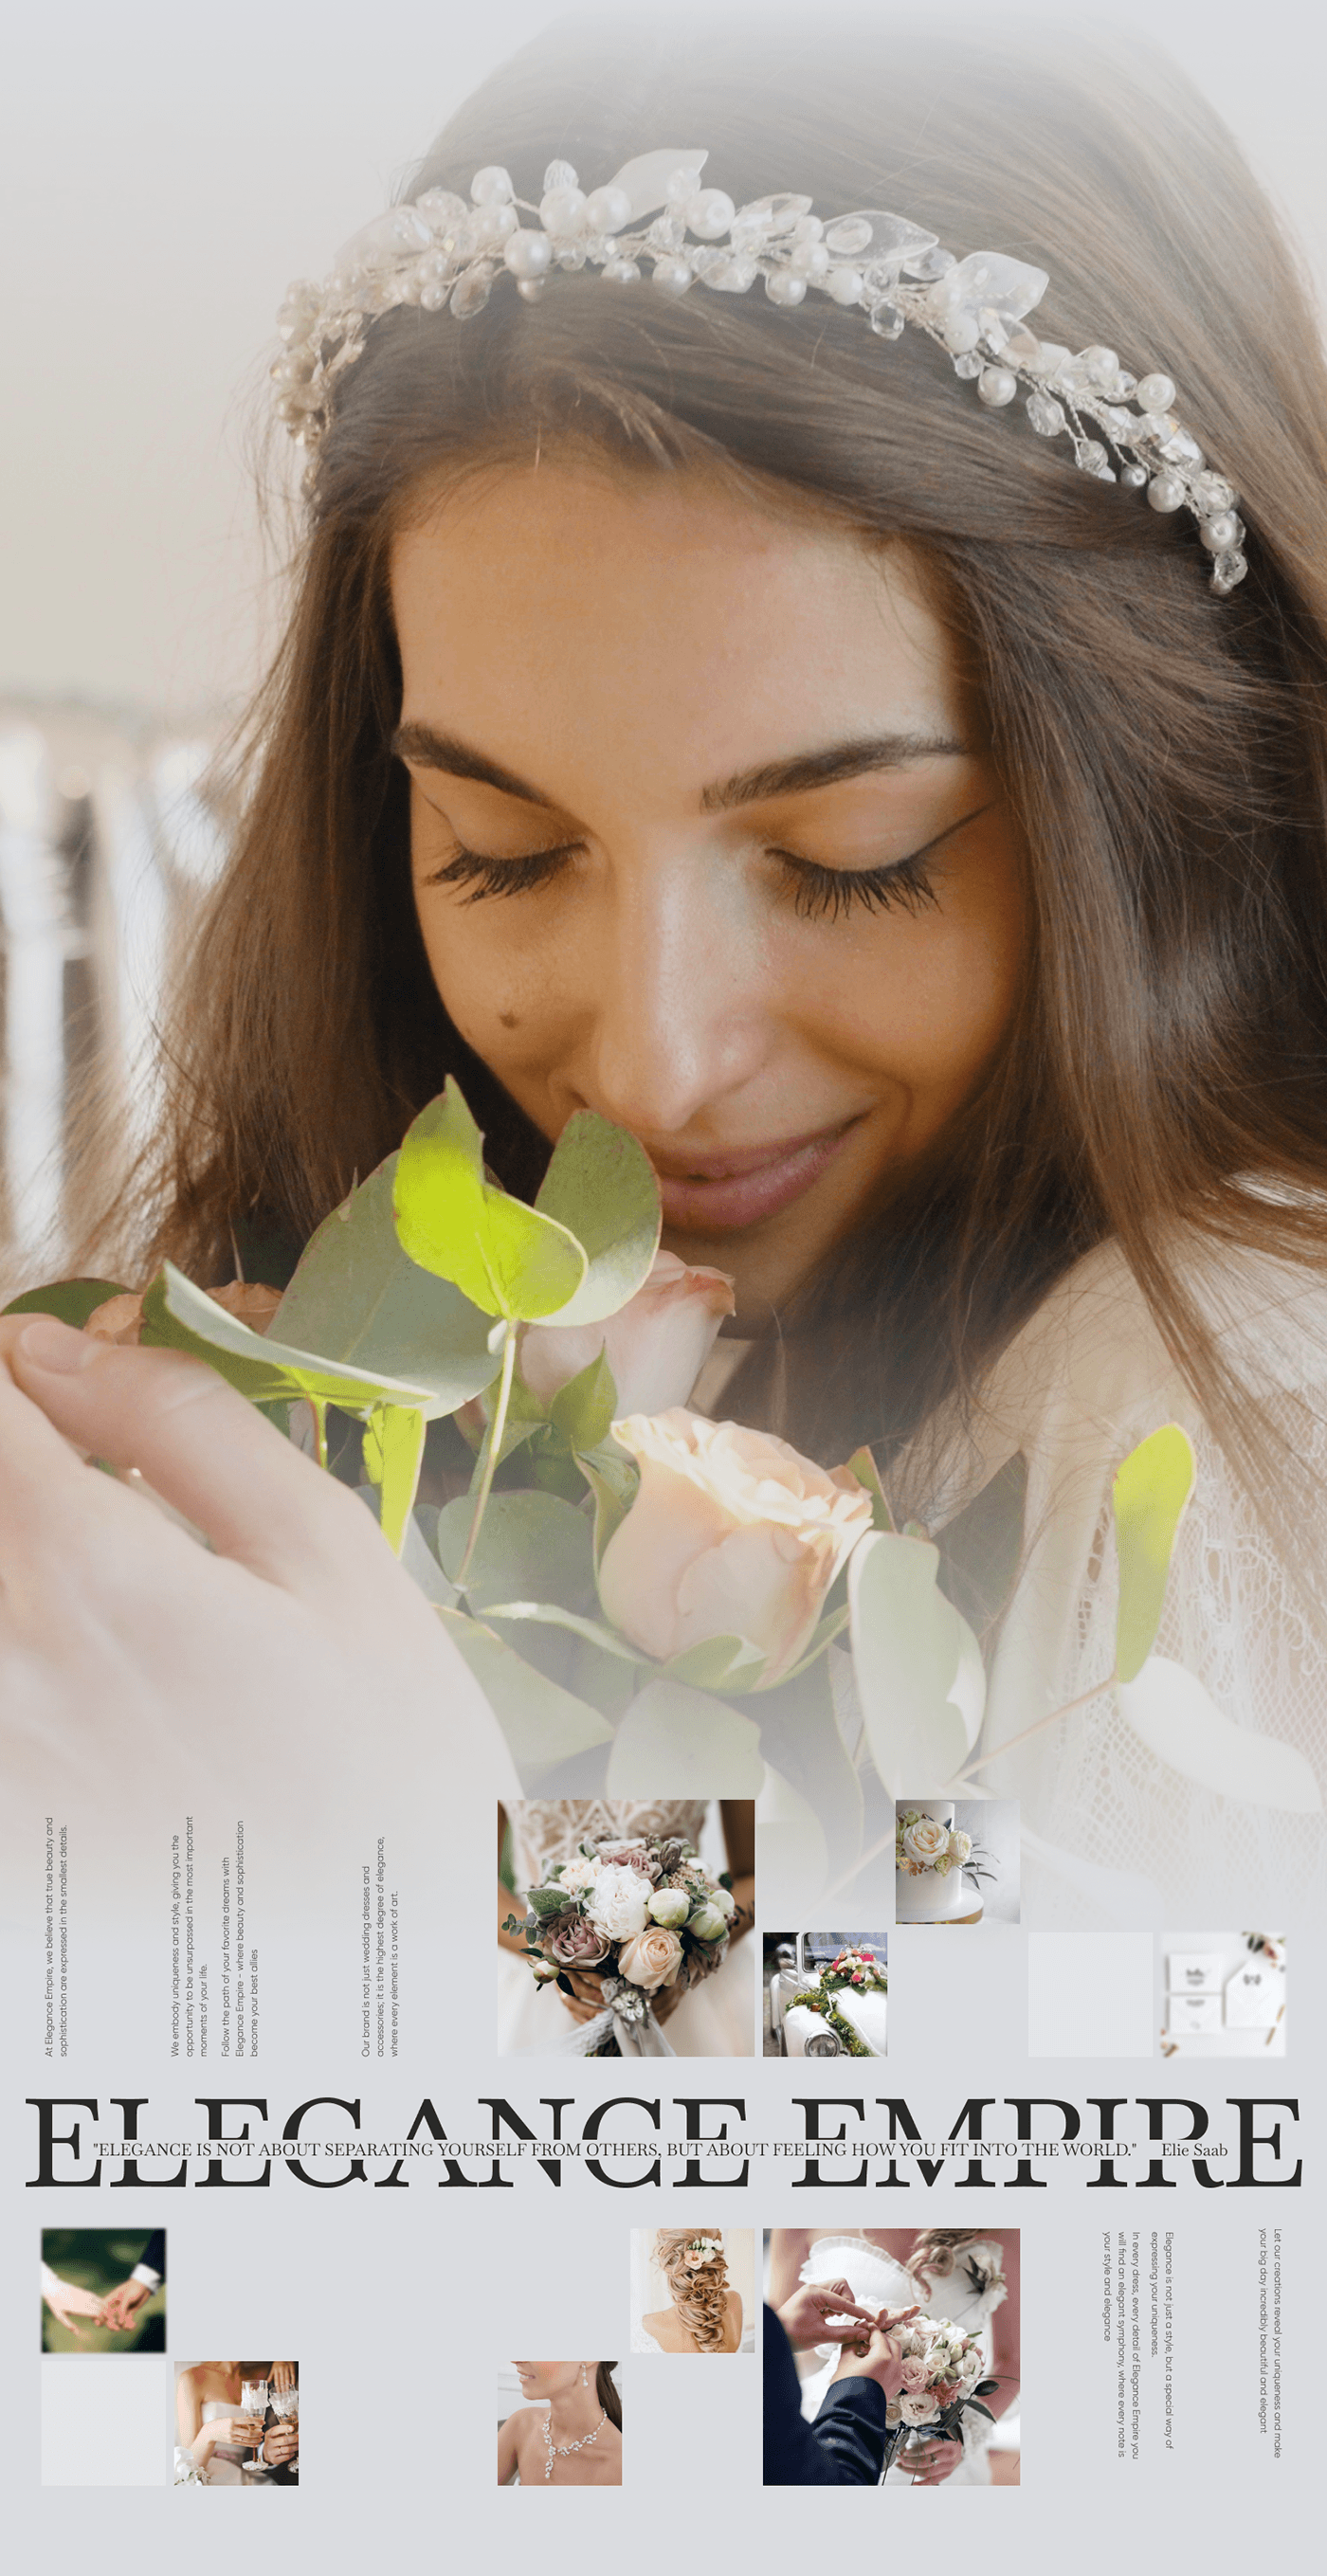 Fashion  moda weeding beauty woman e-commerce Web Design  Website UI/UX